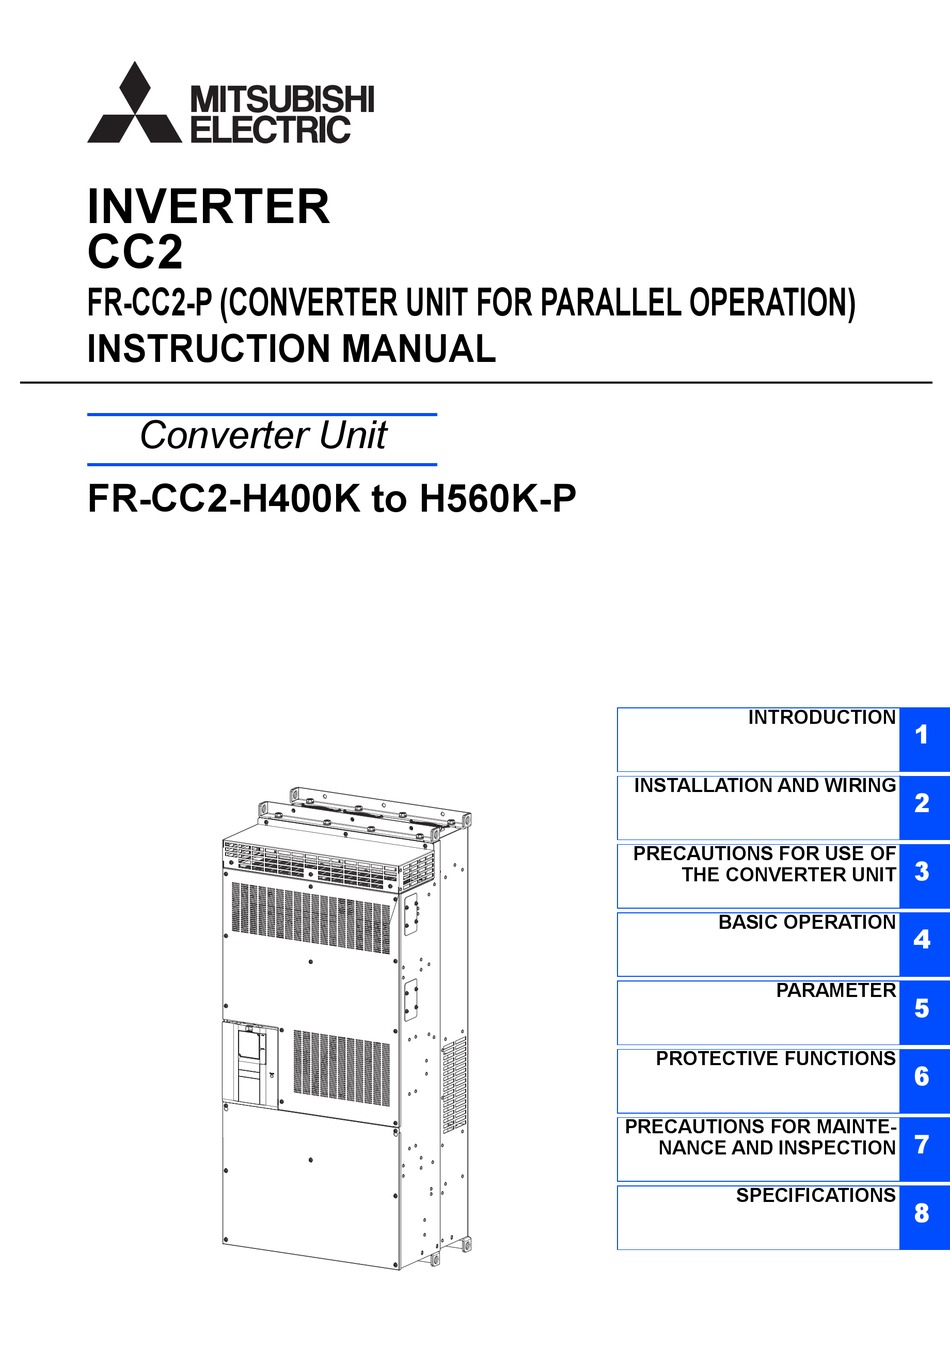 MITSUBISHI ELECTRIC FR-CC2-P INSTRUCTION MANUAL Pdf Download | ManualsLib